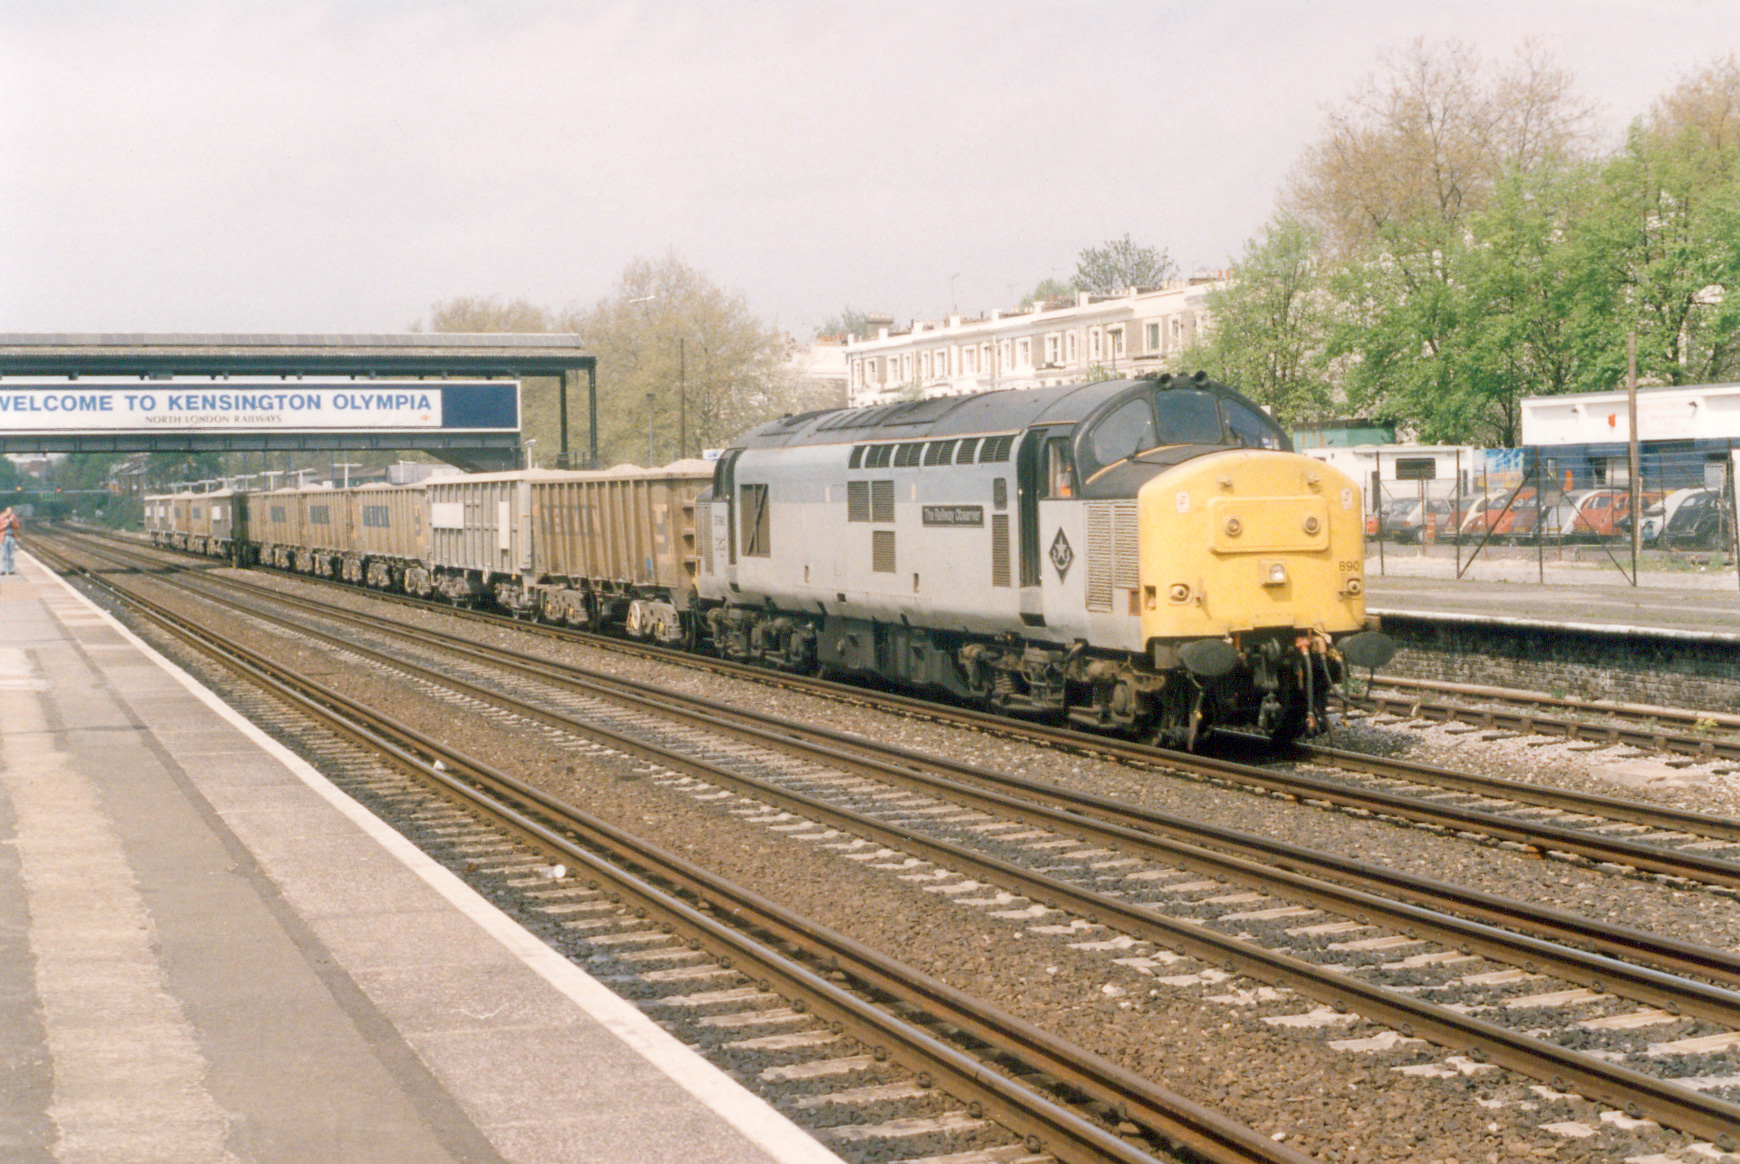 37890 hauling 7O02 12.40 Acton to Woking loaded stone at Kensington Olympia, 27th April 1995. John N Smith